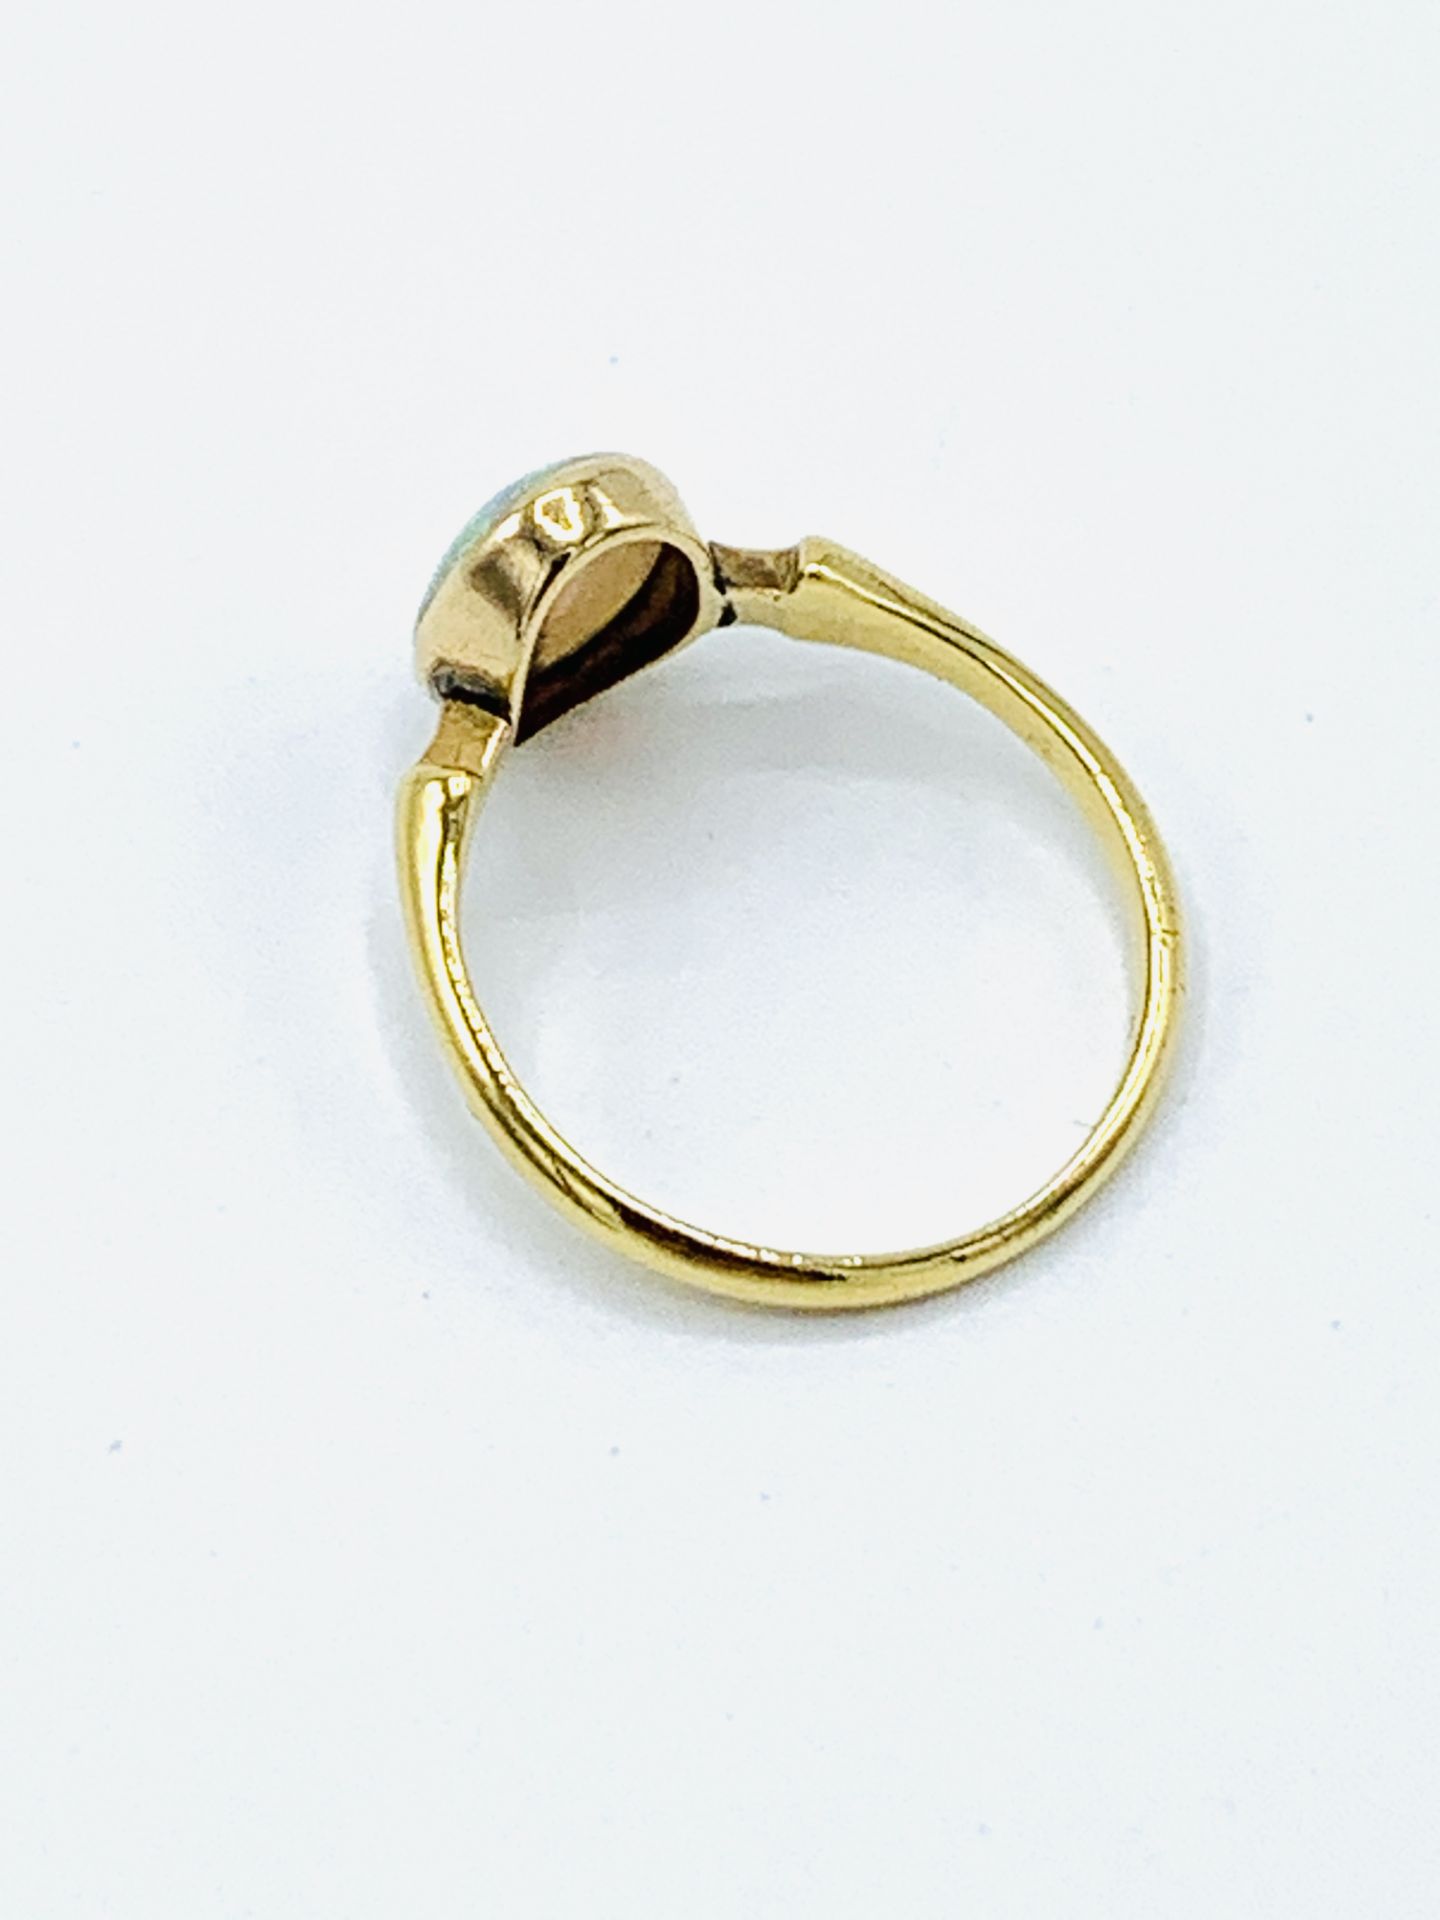 Gold set opal ring. - Image 3 of 4